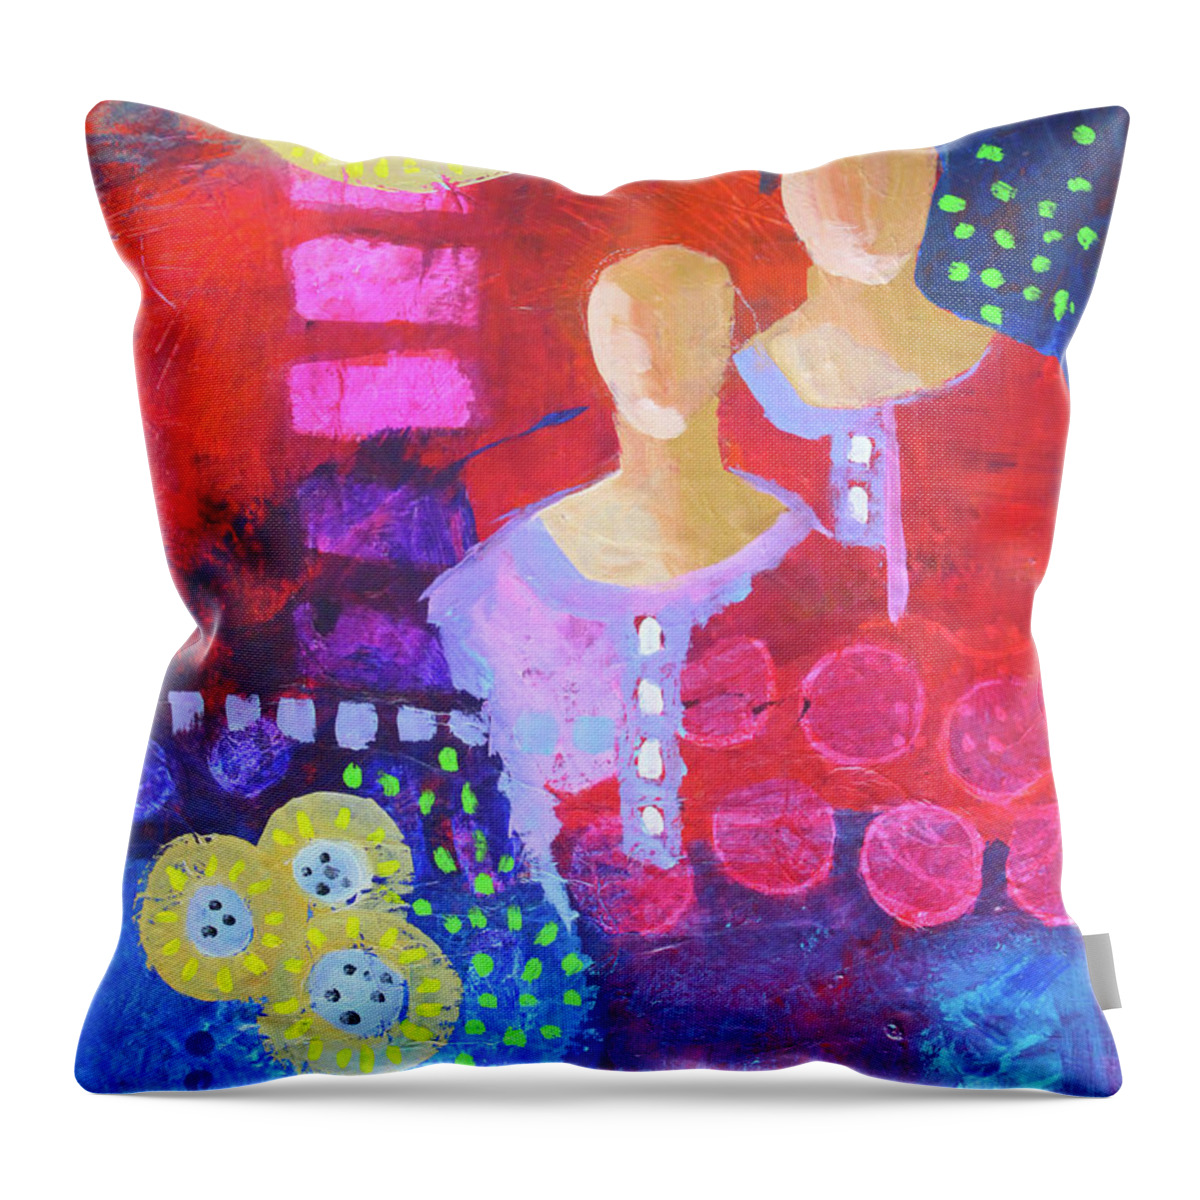 Women Throw Pillow featuring the painting Women of Wisdom by Nancy Merkle